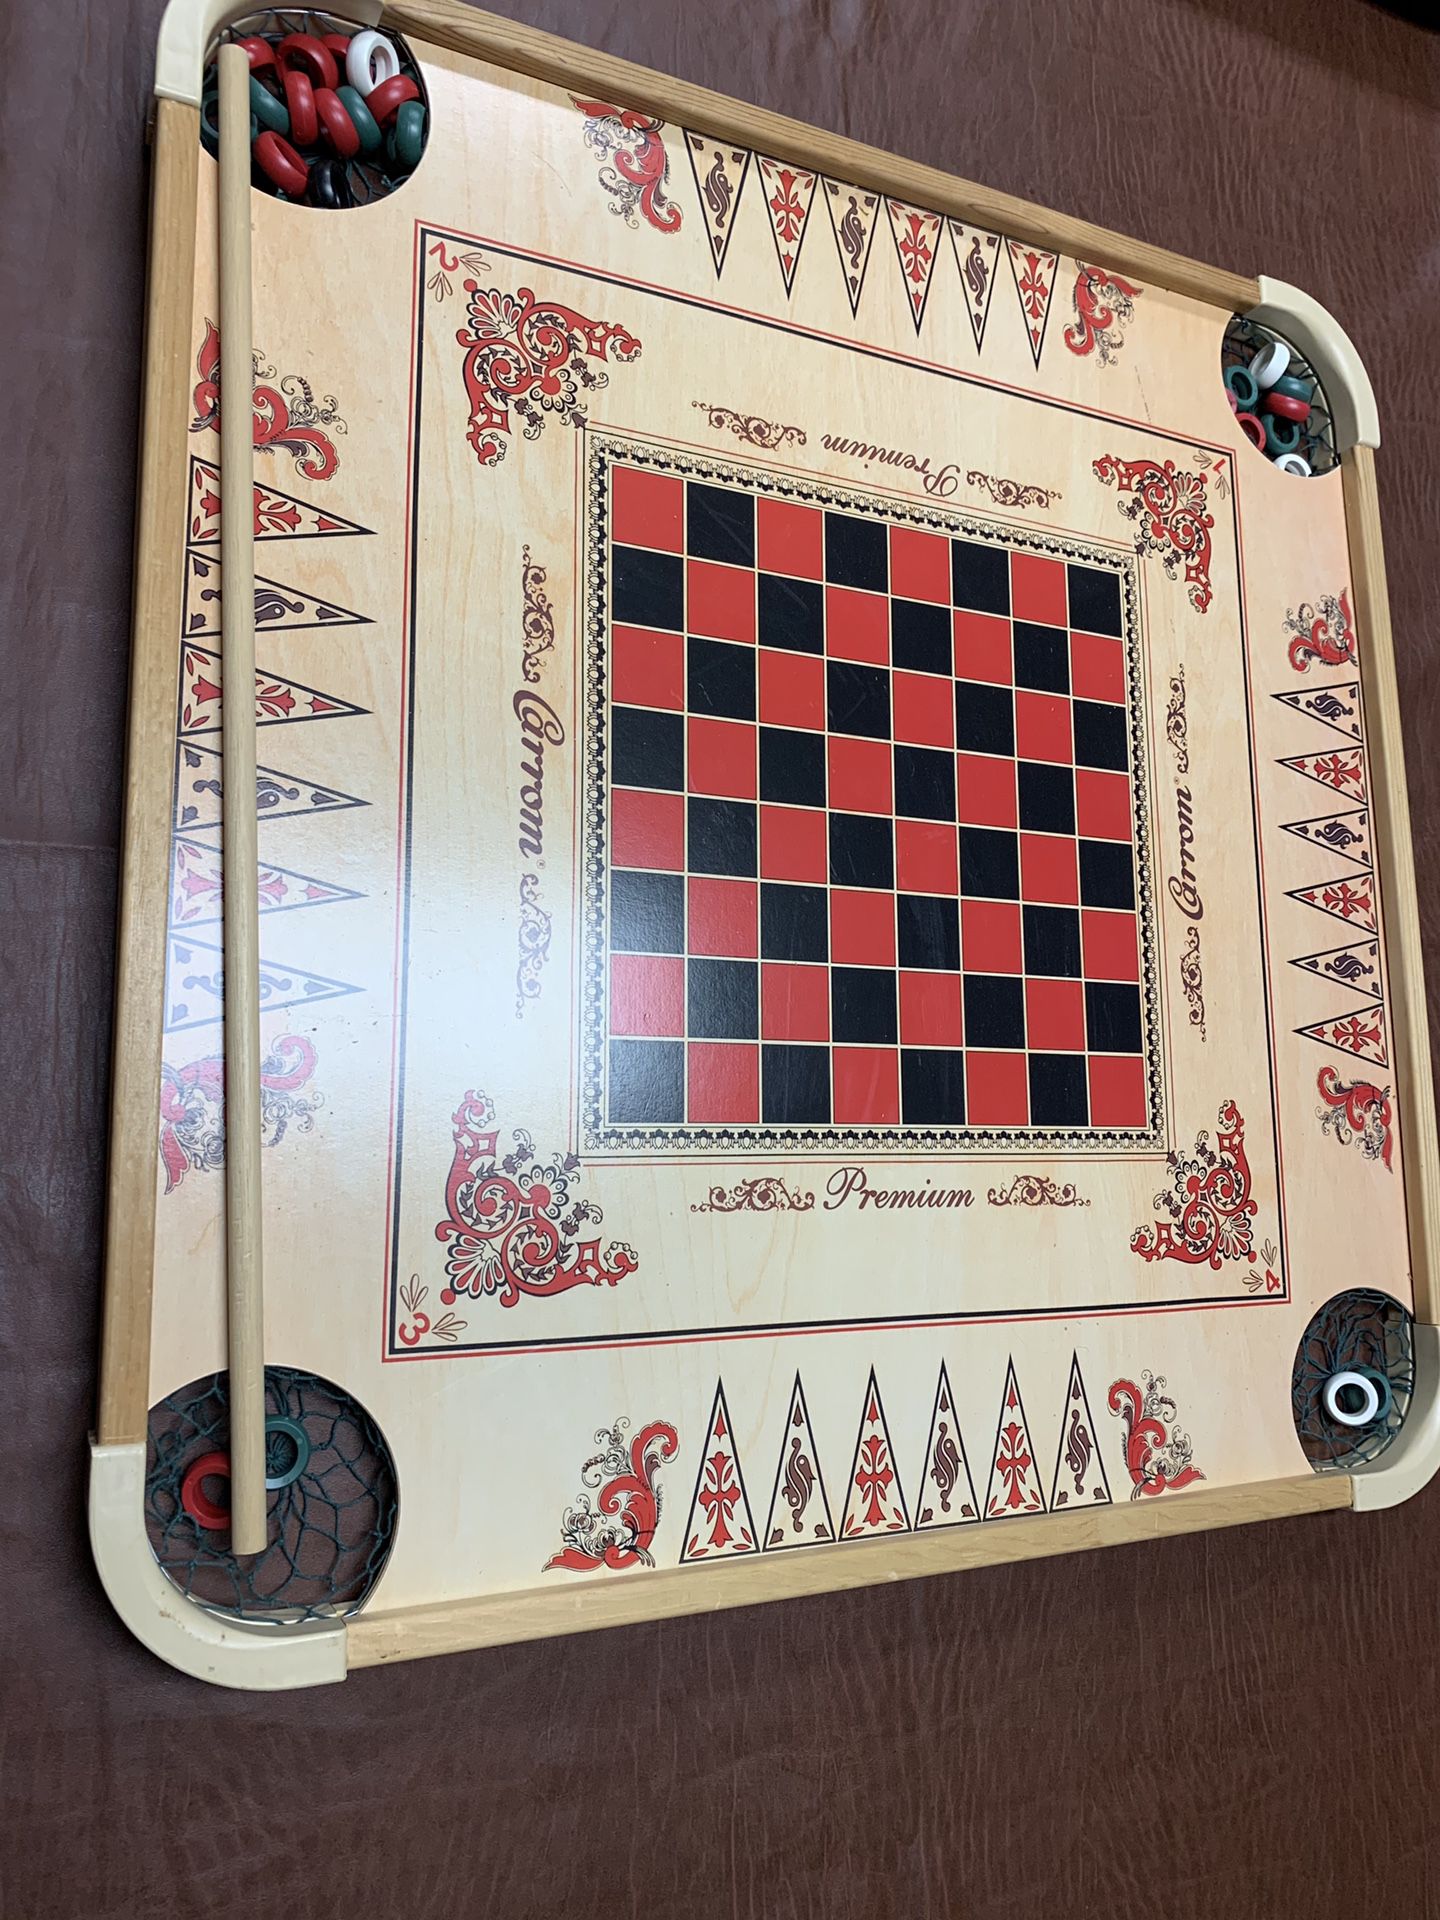 Carrom vintage board game